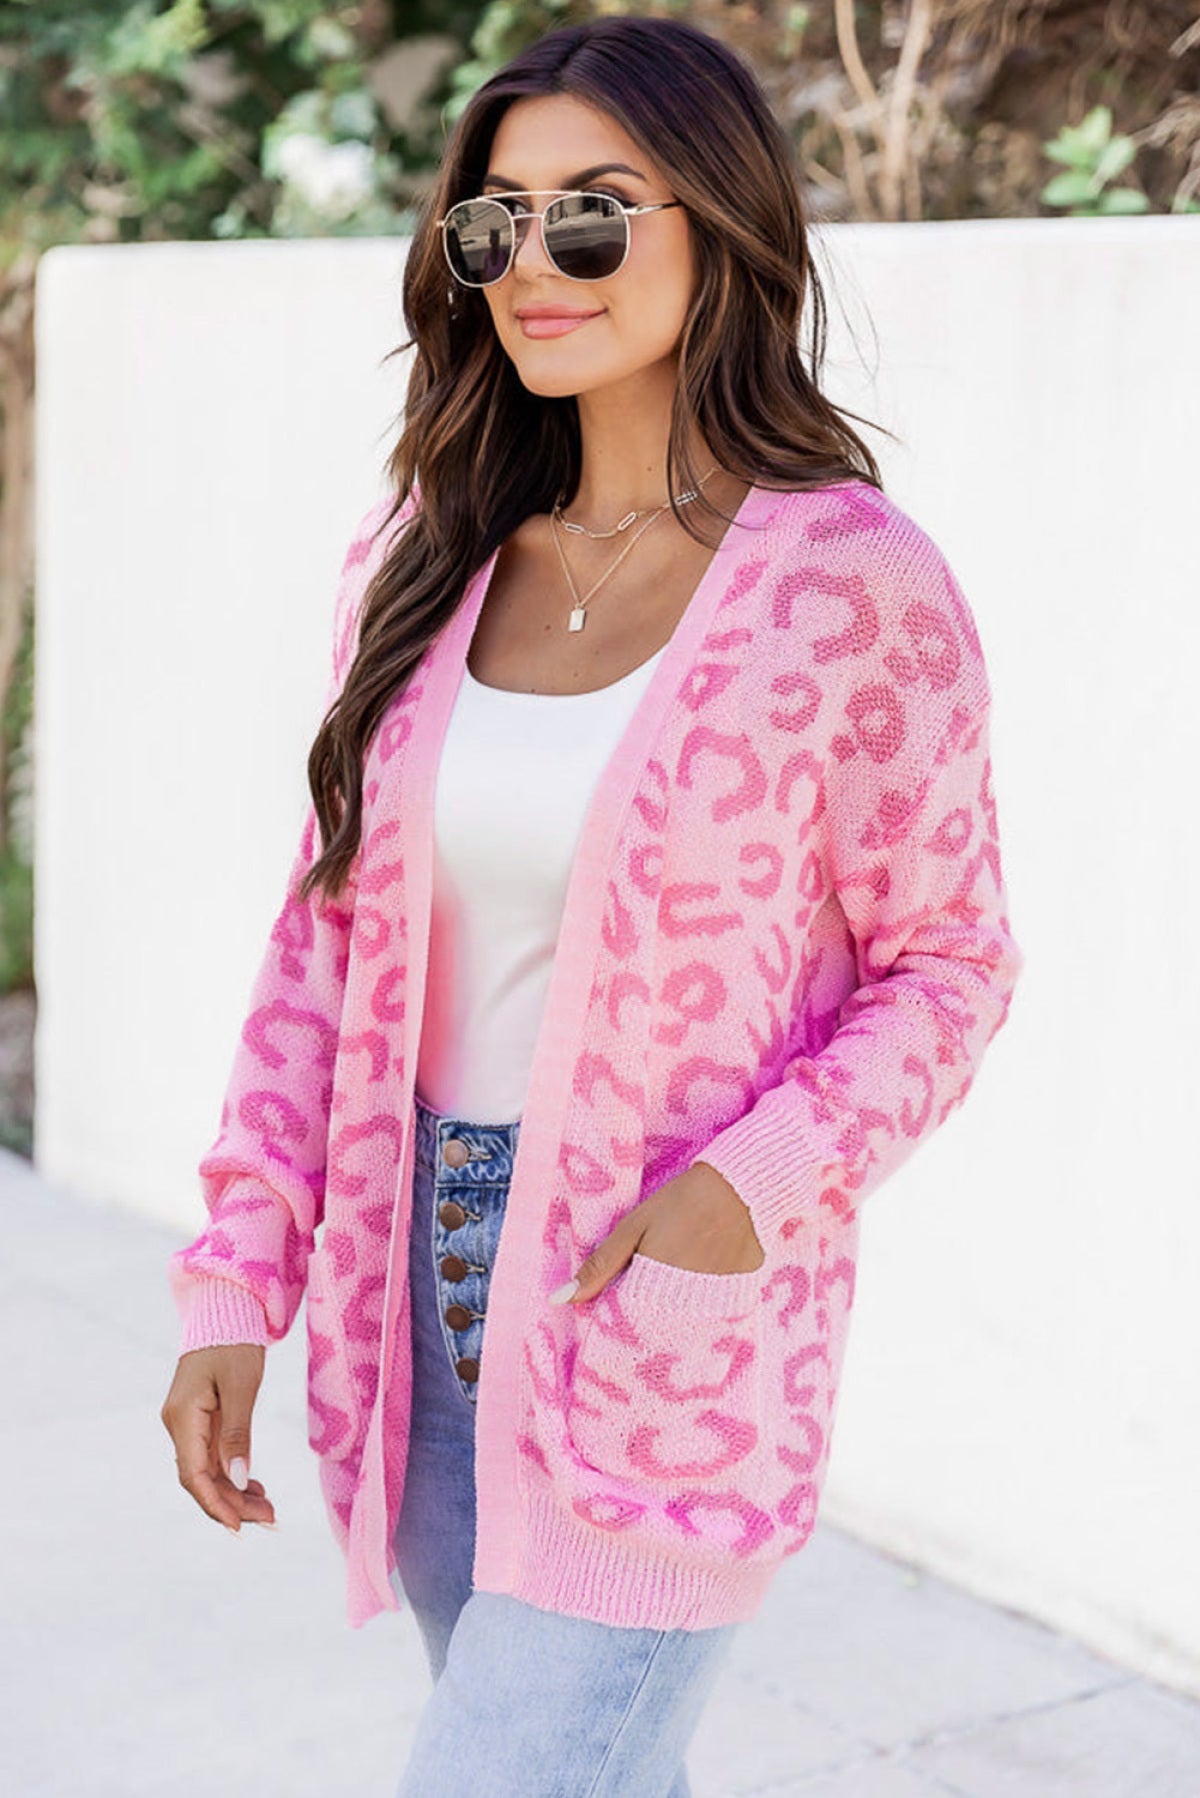 Pink Animal Print Leopard Cardigan